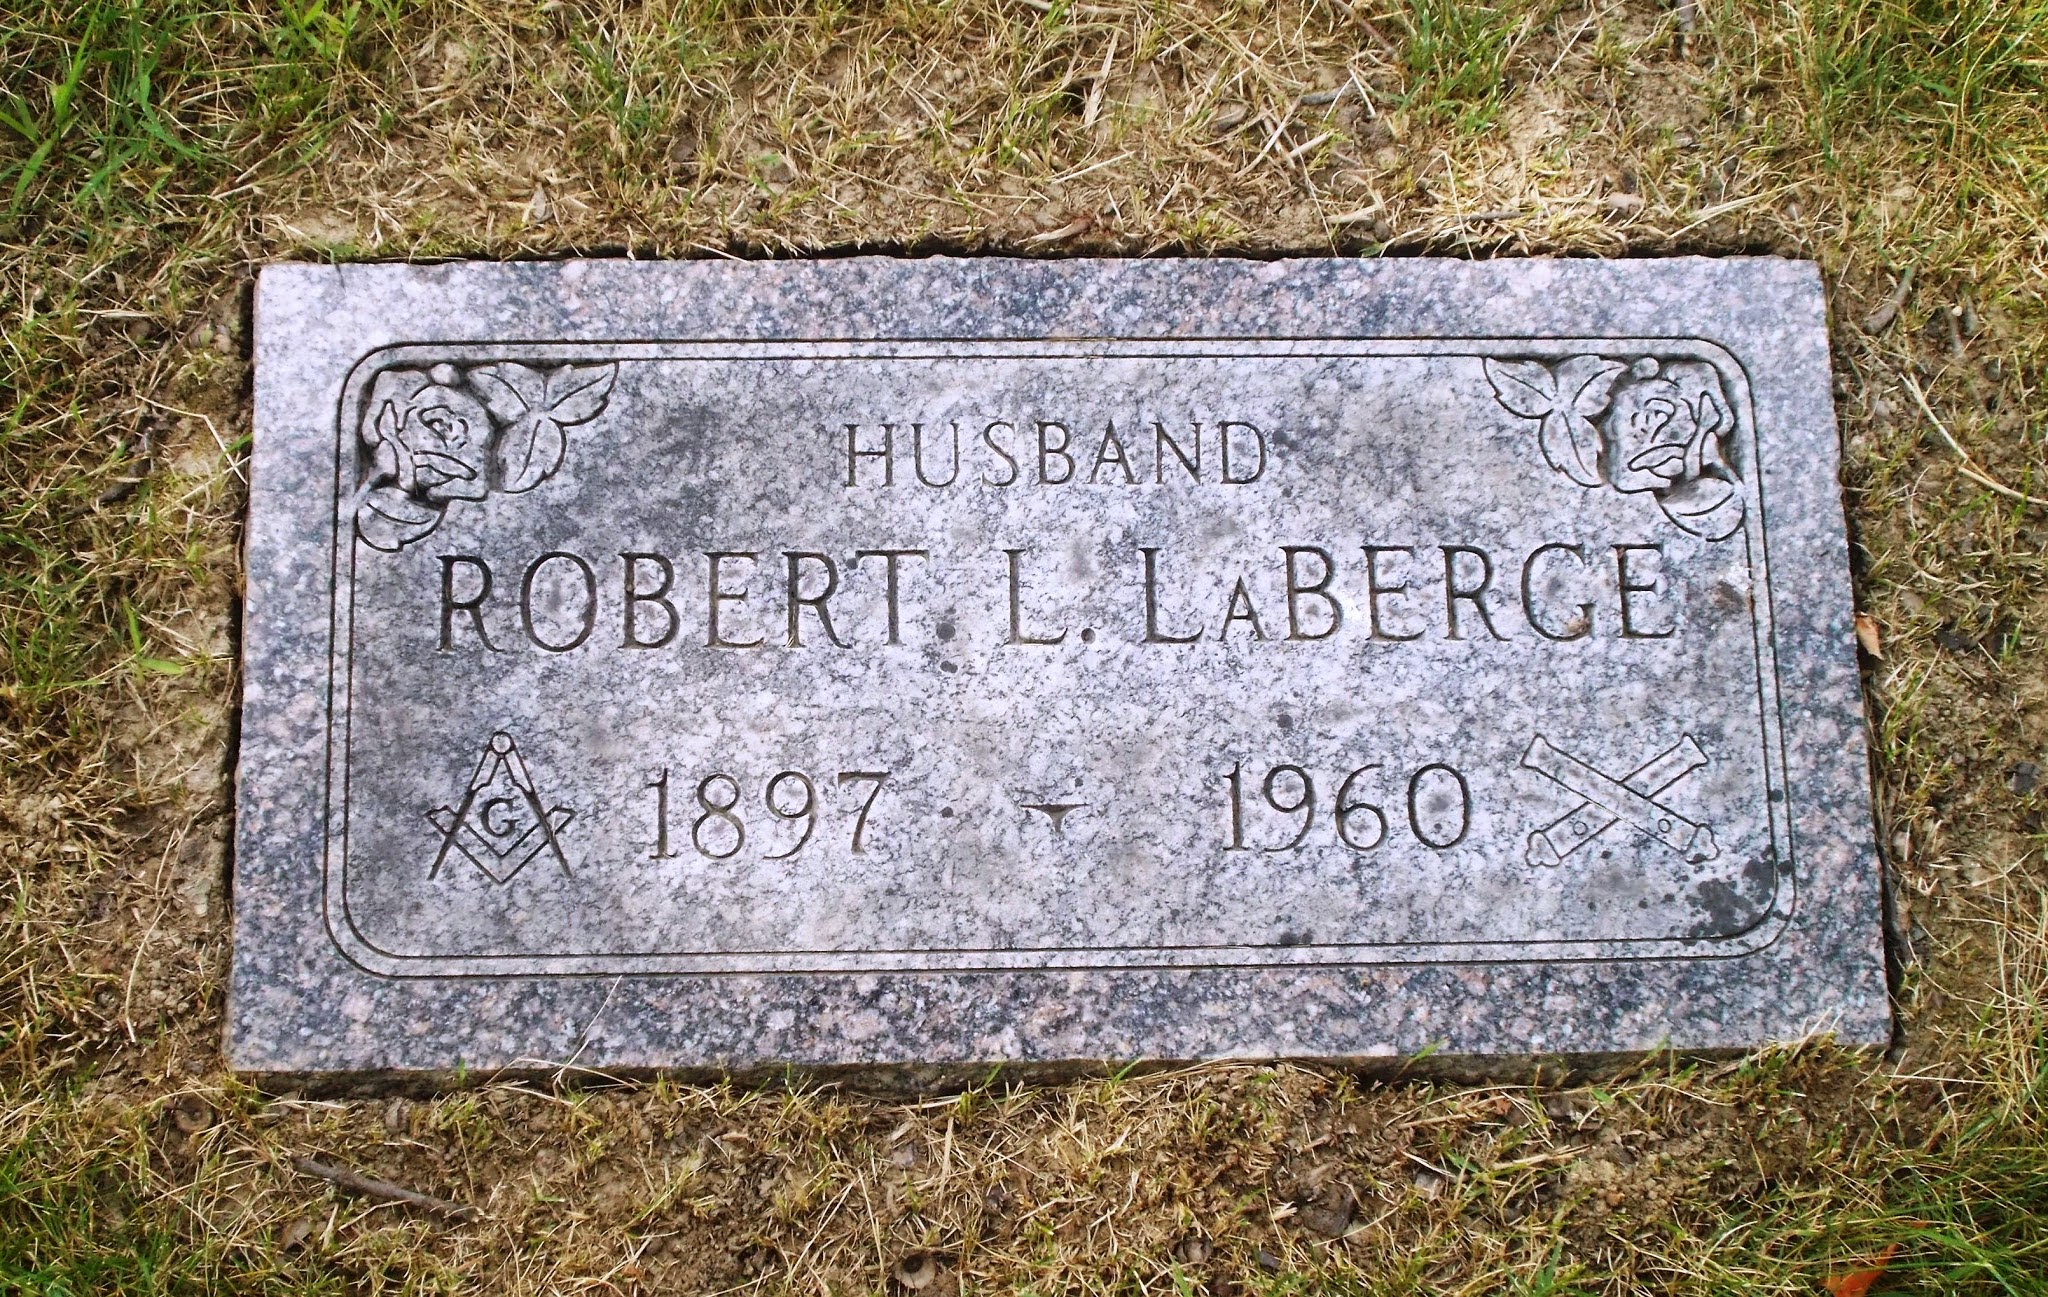 Robert L LaBerge